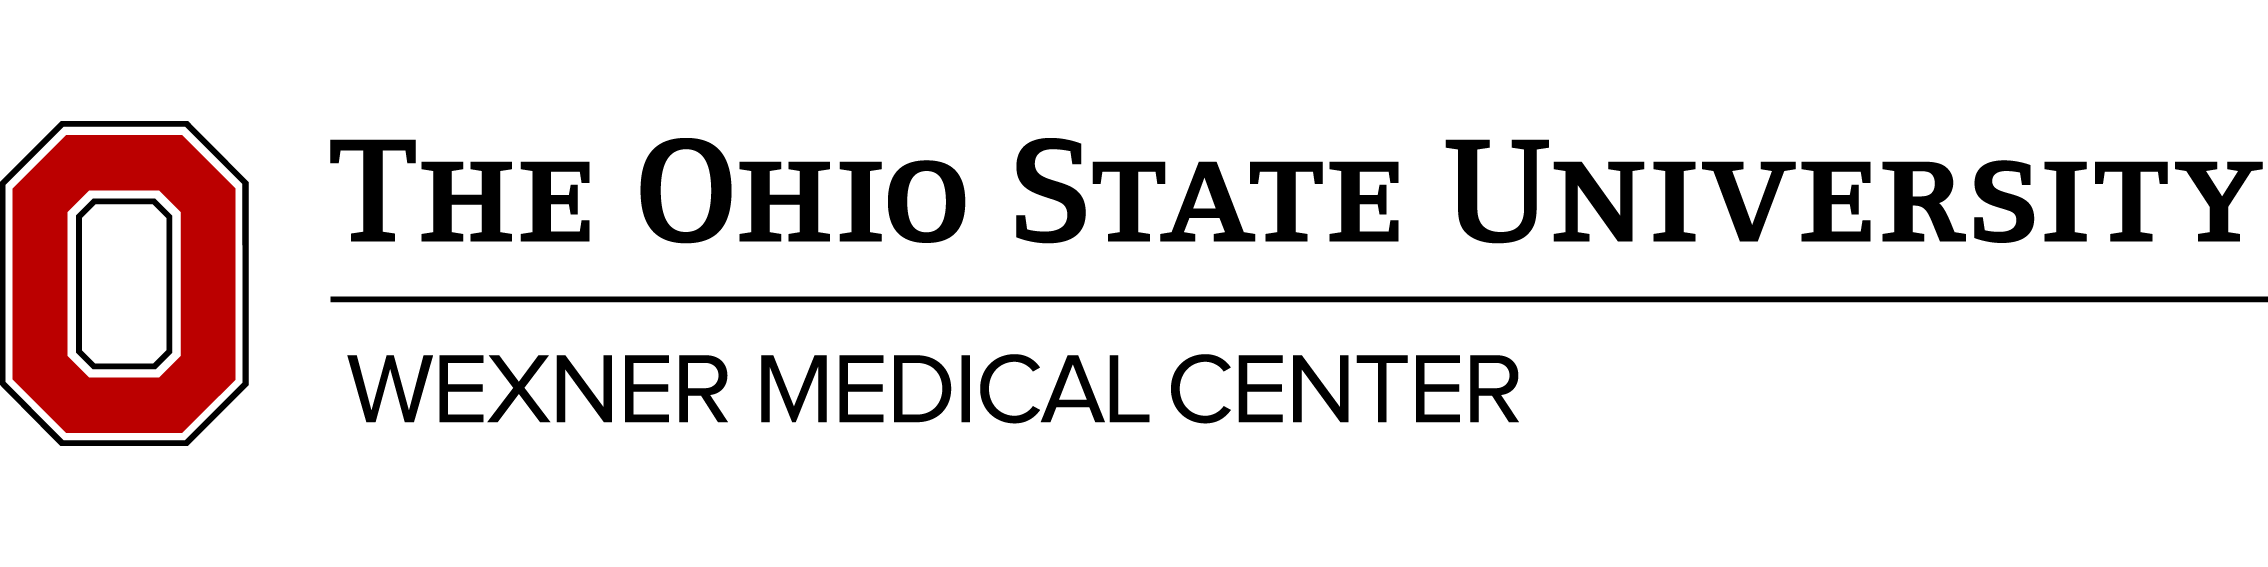 OSU_Medical_Center